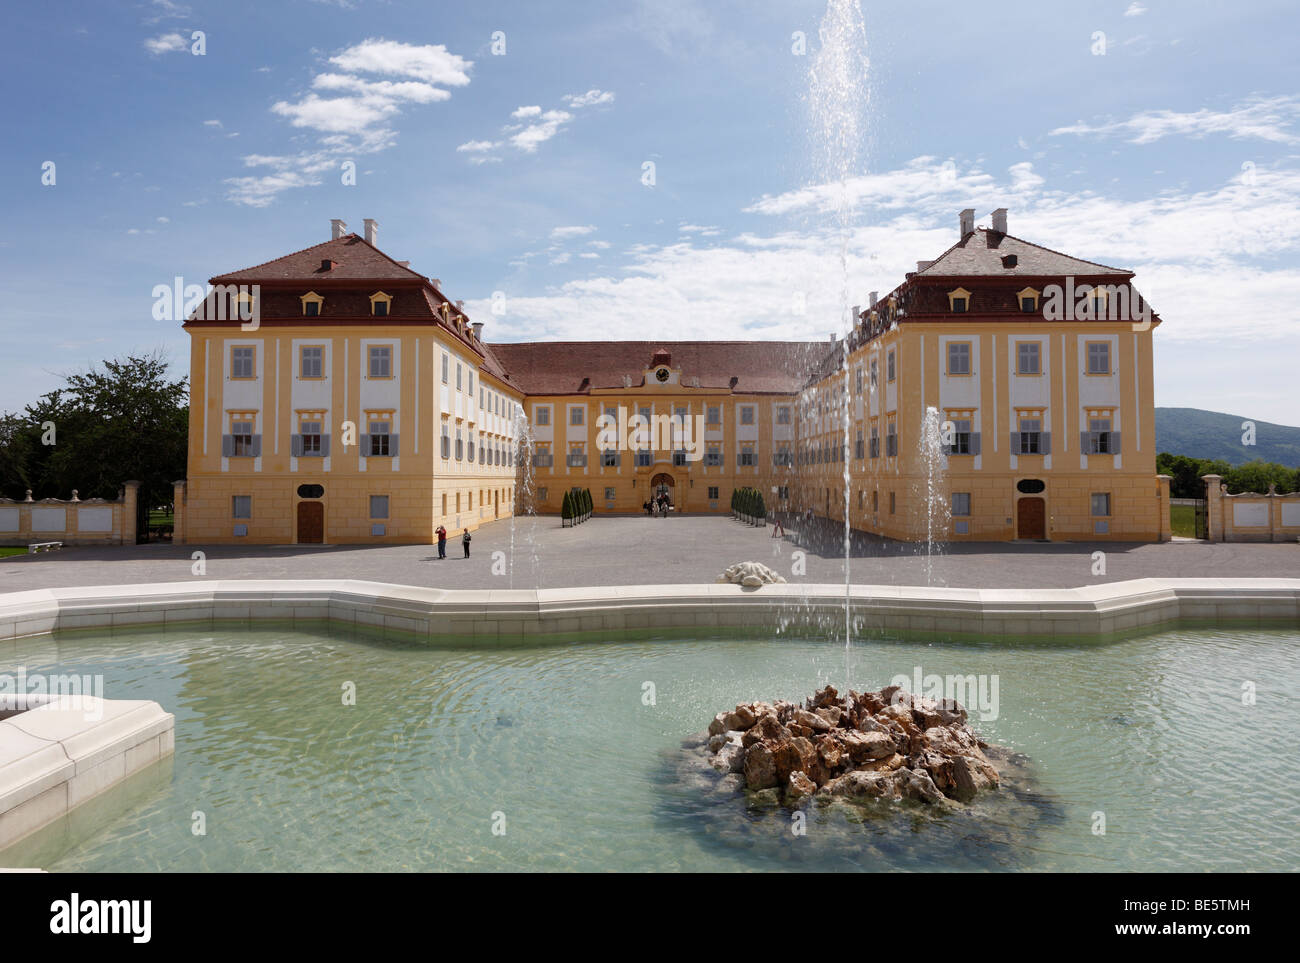 Neptunbrunnen fountain and main courtyard, Schloss Hof castle in Schlosshof, Marchfeld, Lower Austria, Austria, Europe Stock Photo